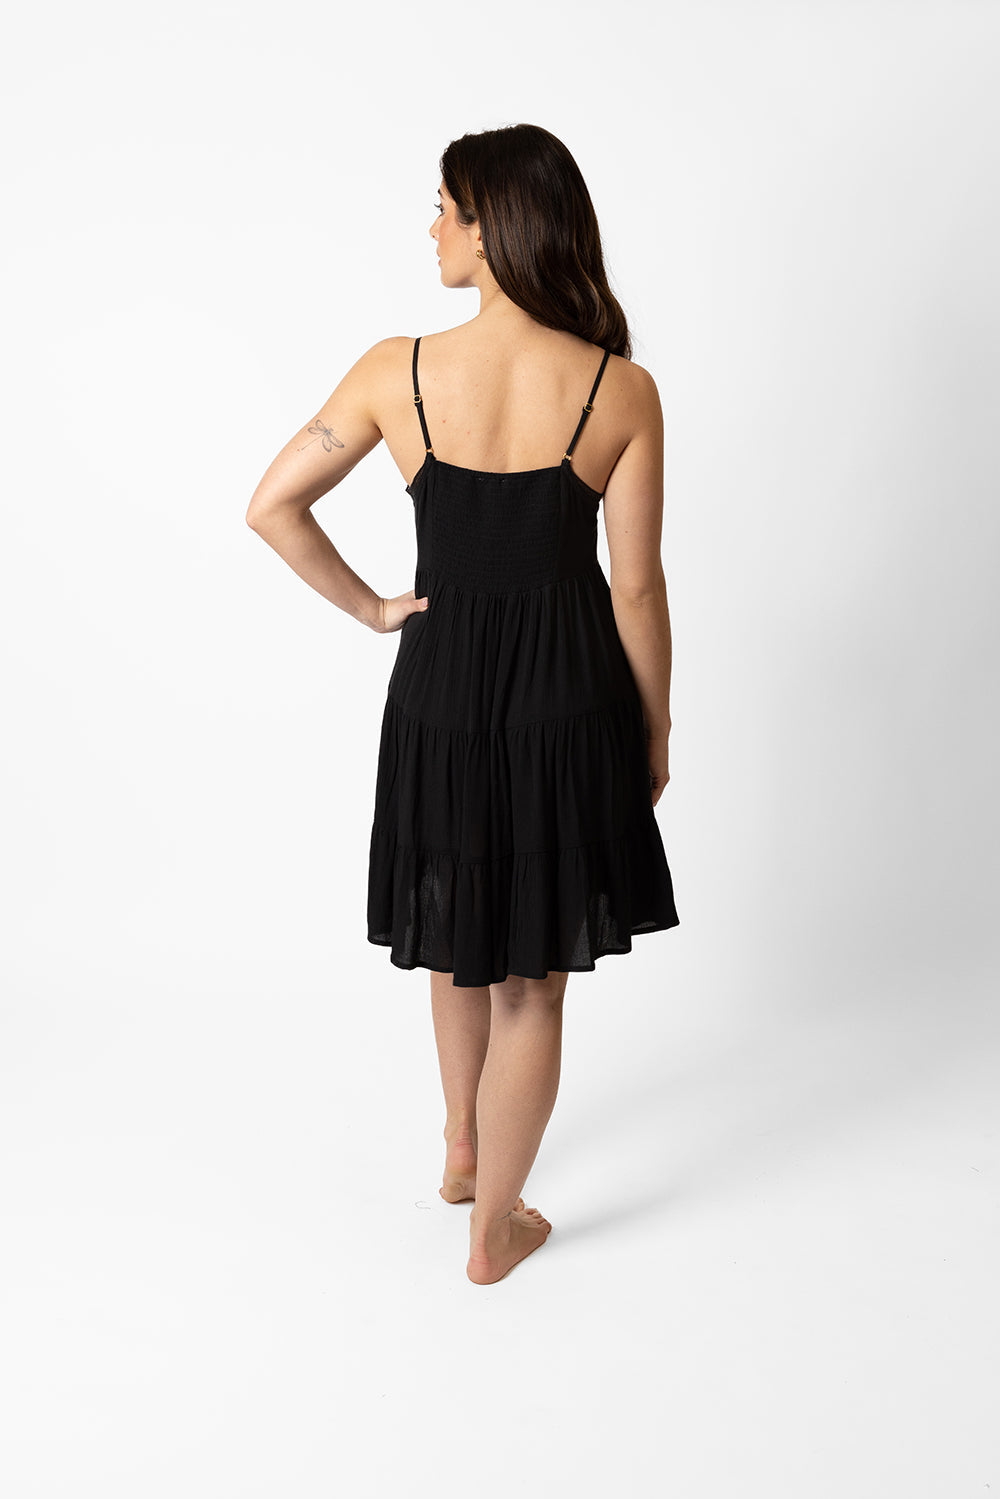 the back of a dark hair woman wearing a black spaghetti strap beach mini dress with one hand on her waist